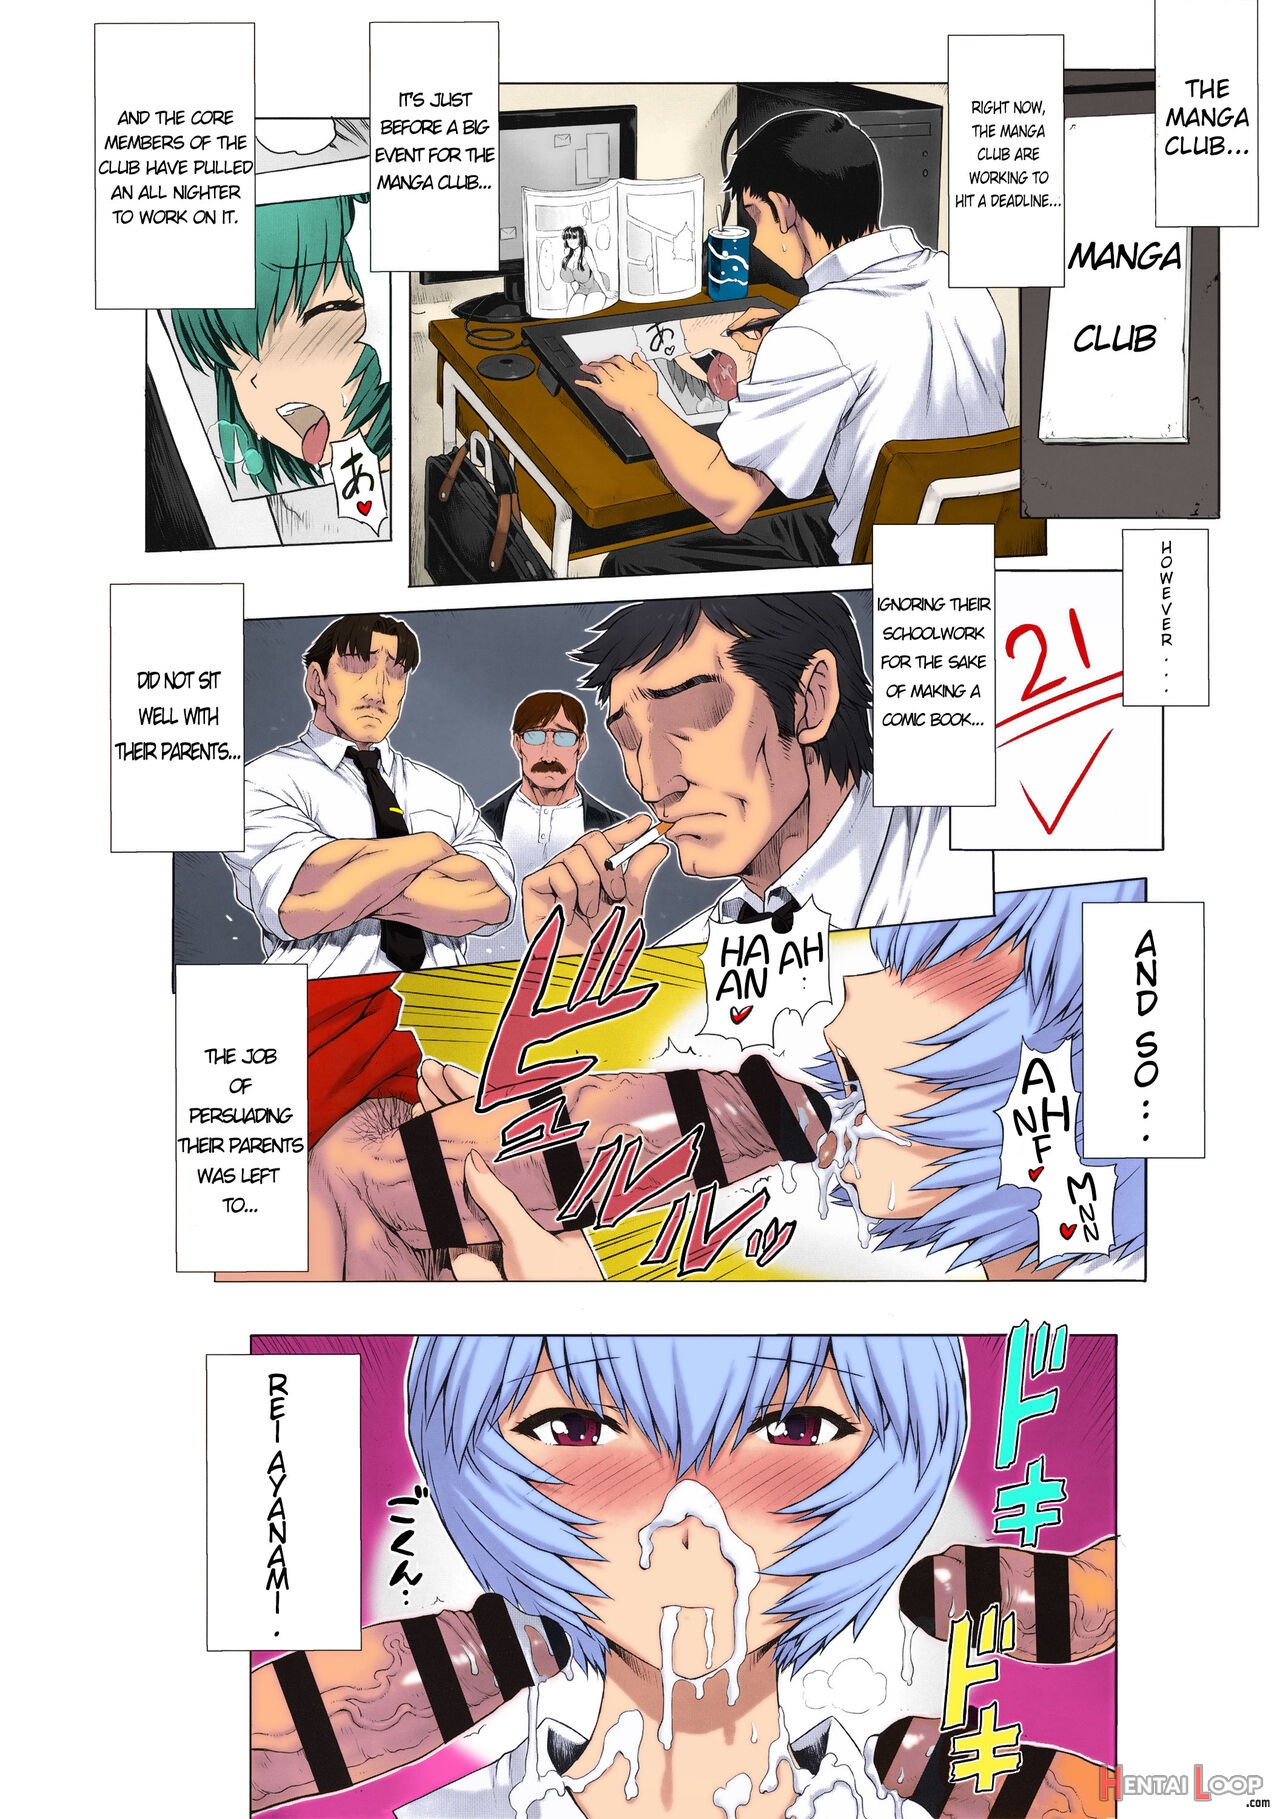 Ayanami Dai 8 Kai Kanojo Hen - Colorized page 2